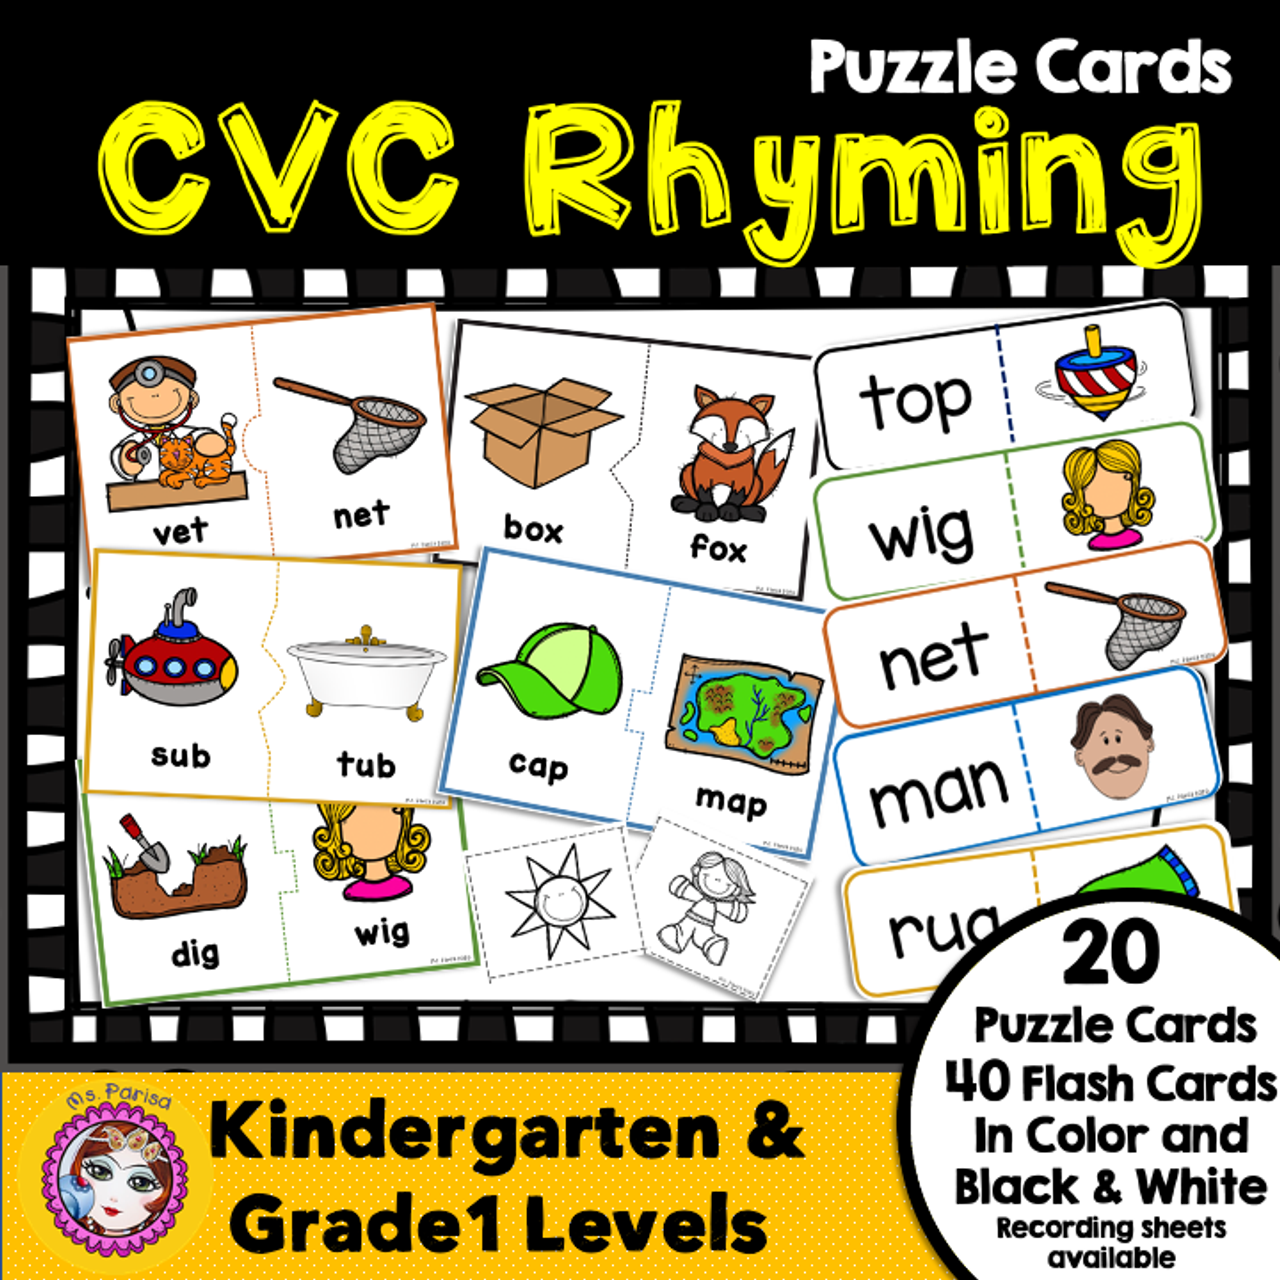 CVC Rhyming Cards